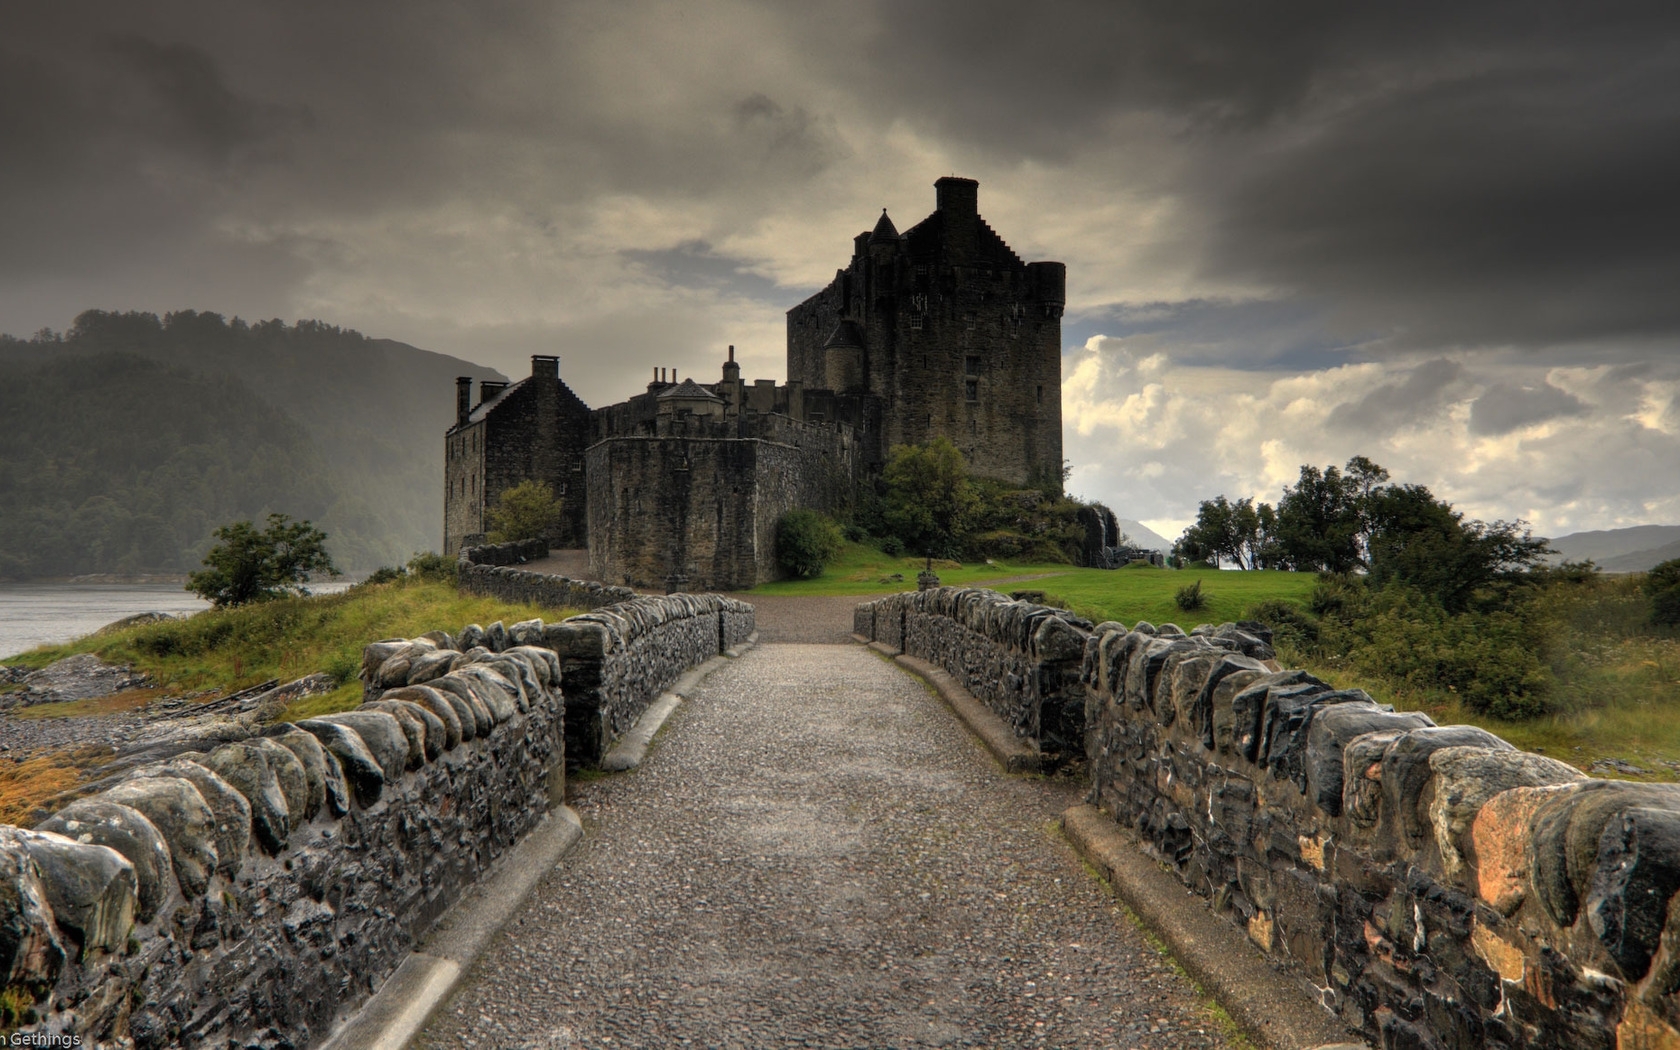 Popular Castles Image for Phone